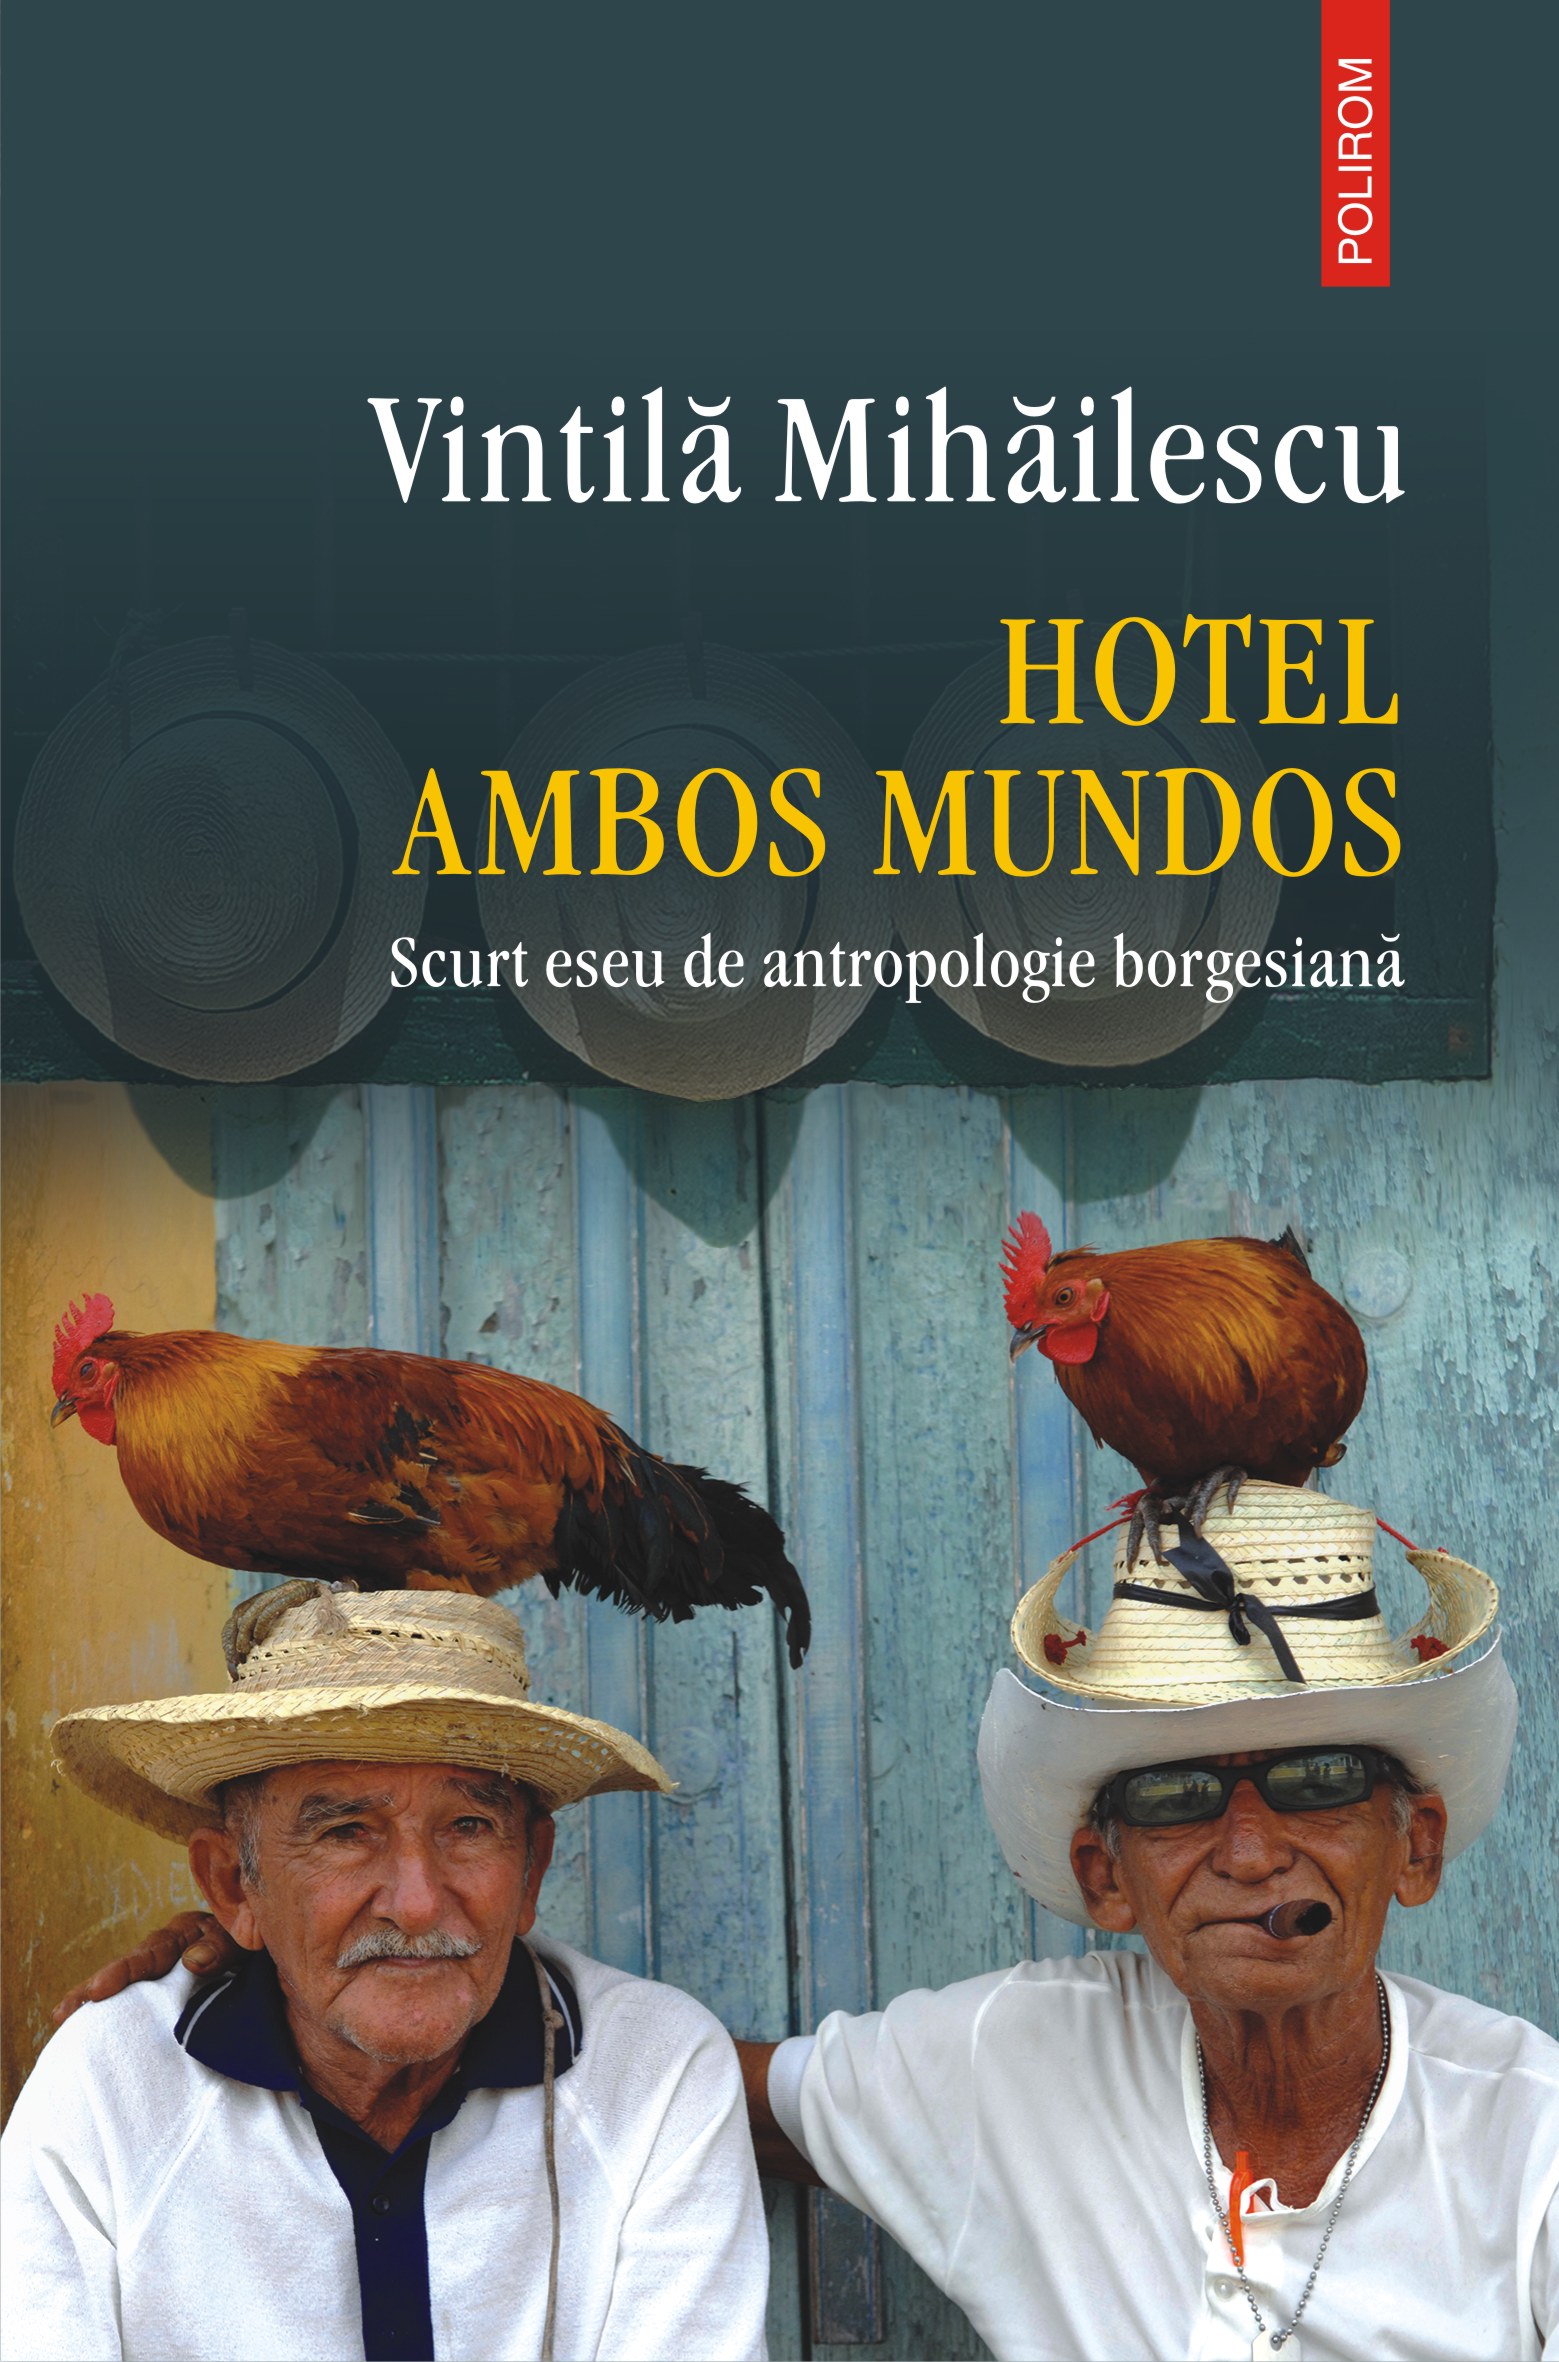 eBook Hotel Ambos Mundos scurt eseu de antropologie borgesiana - Vintila Mihailescu